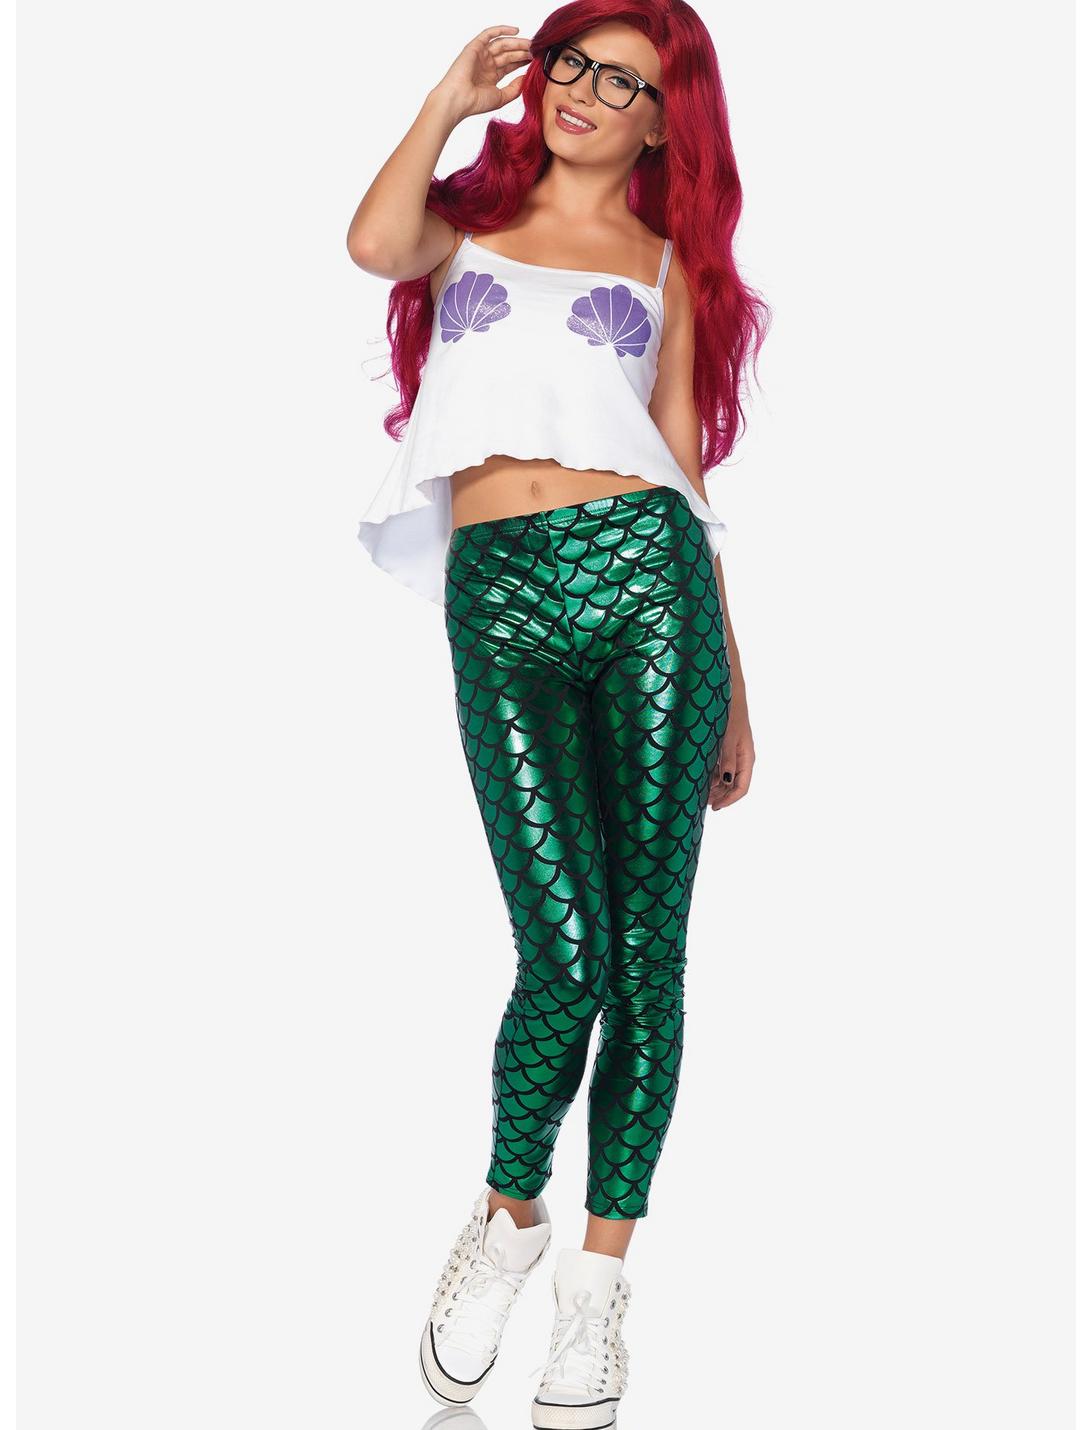 Hipster Mermaid Costume, MULTI COLOR, hi-res